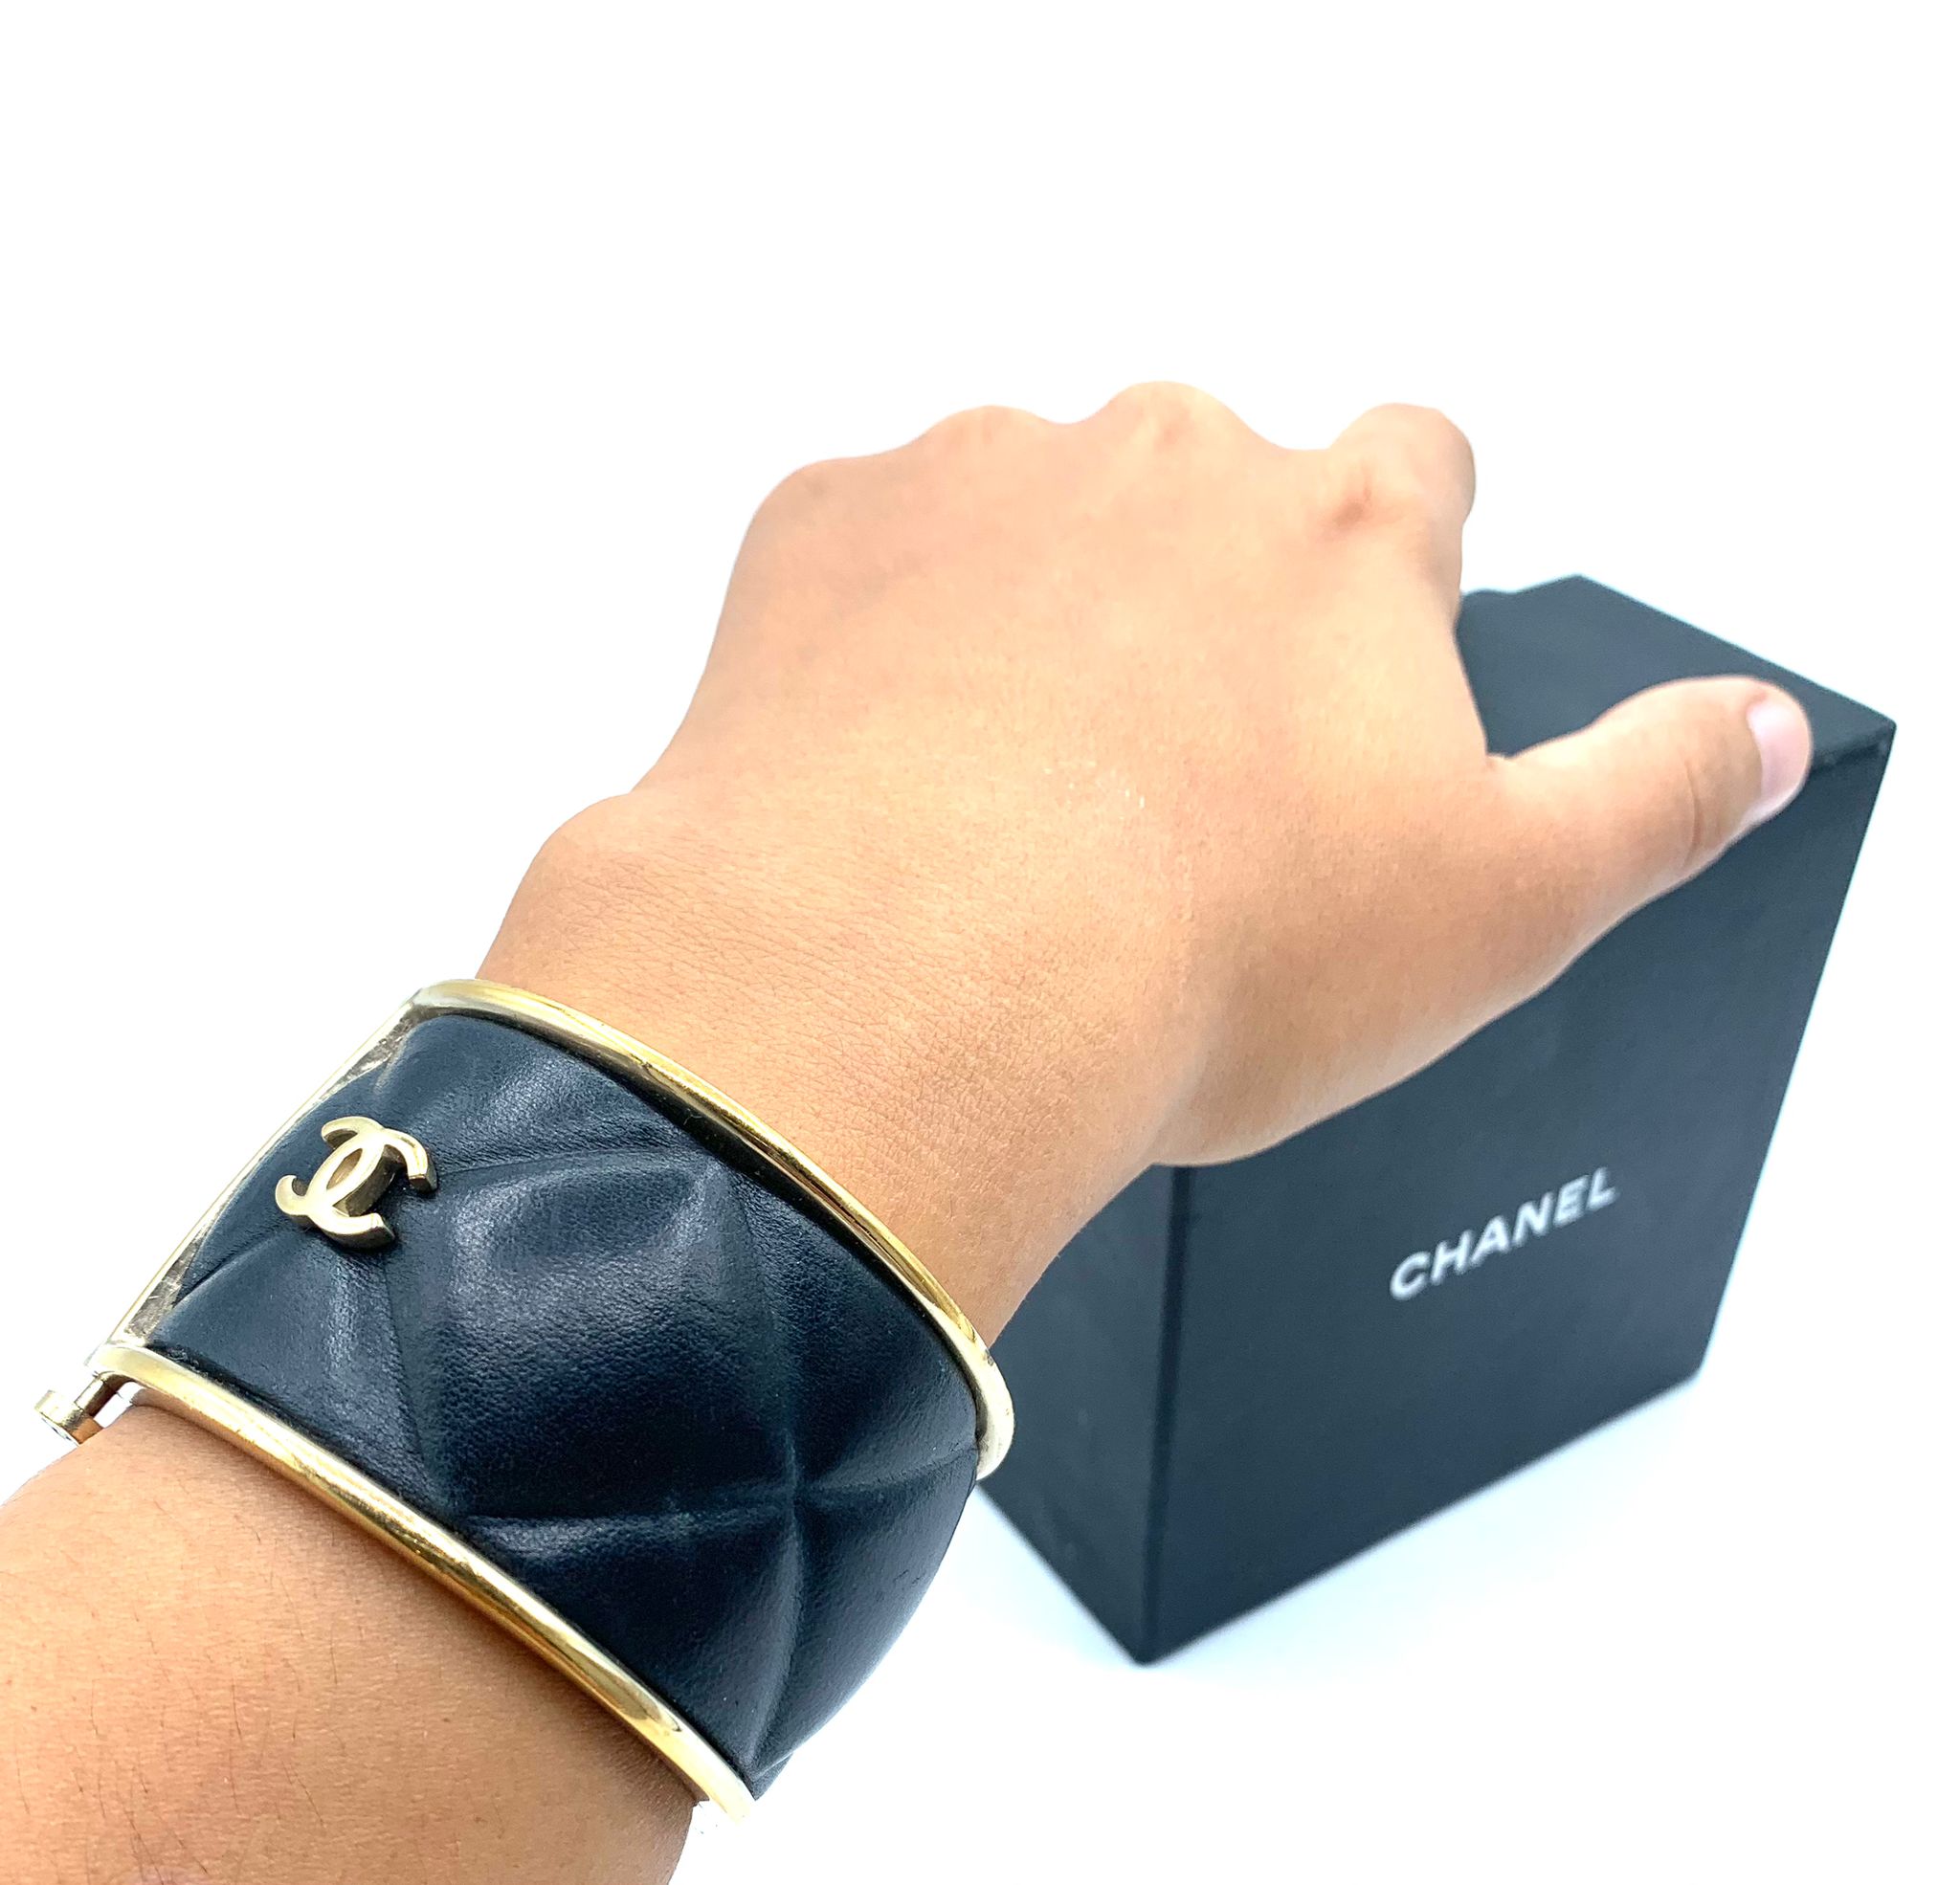 Chanel black gold 19C cuff bracelet | eBay